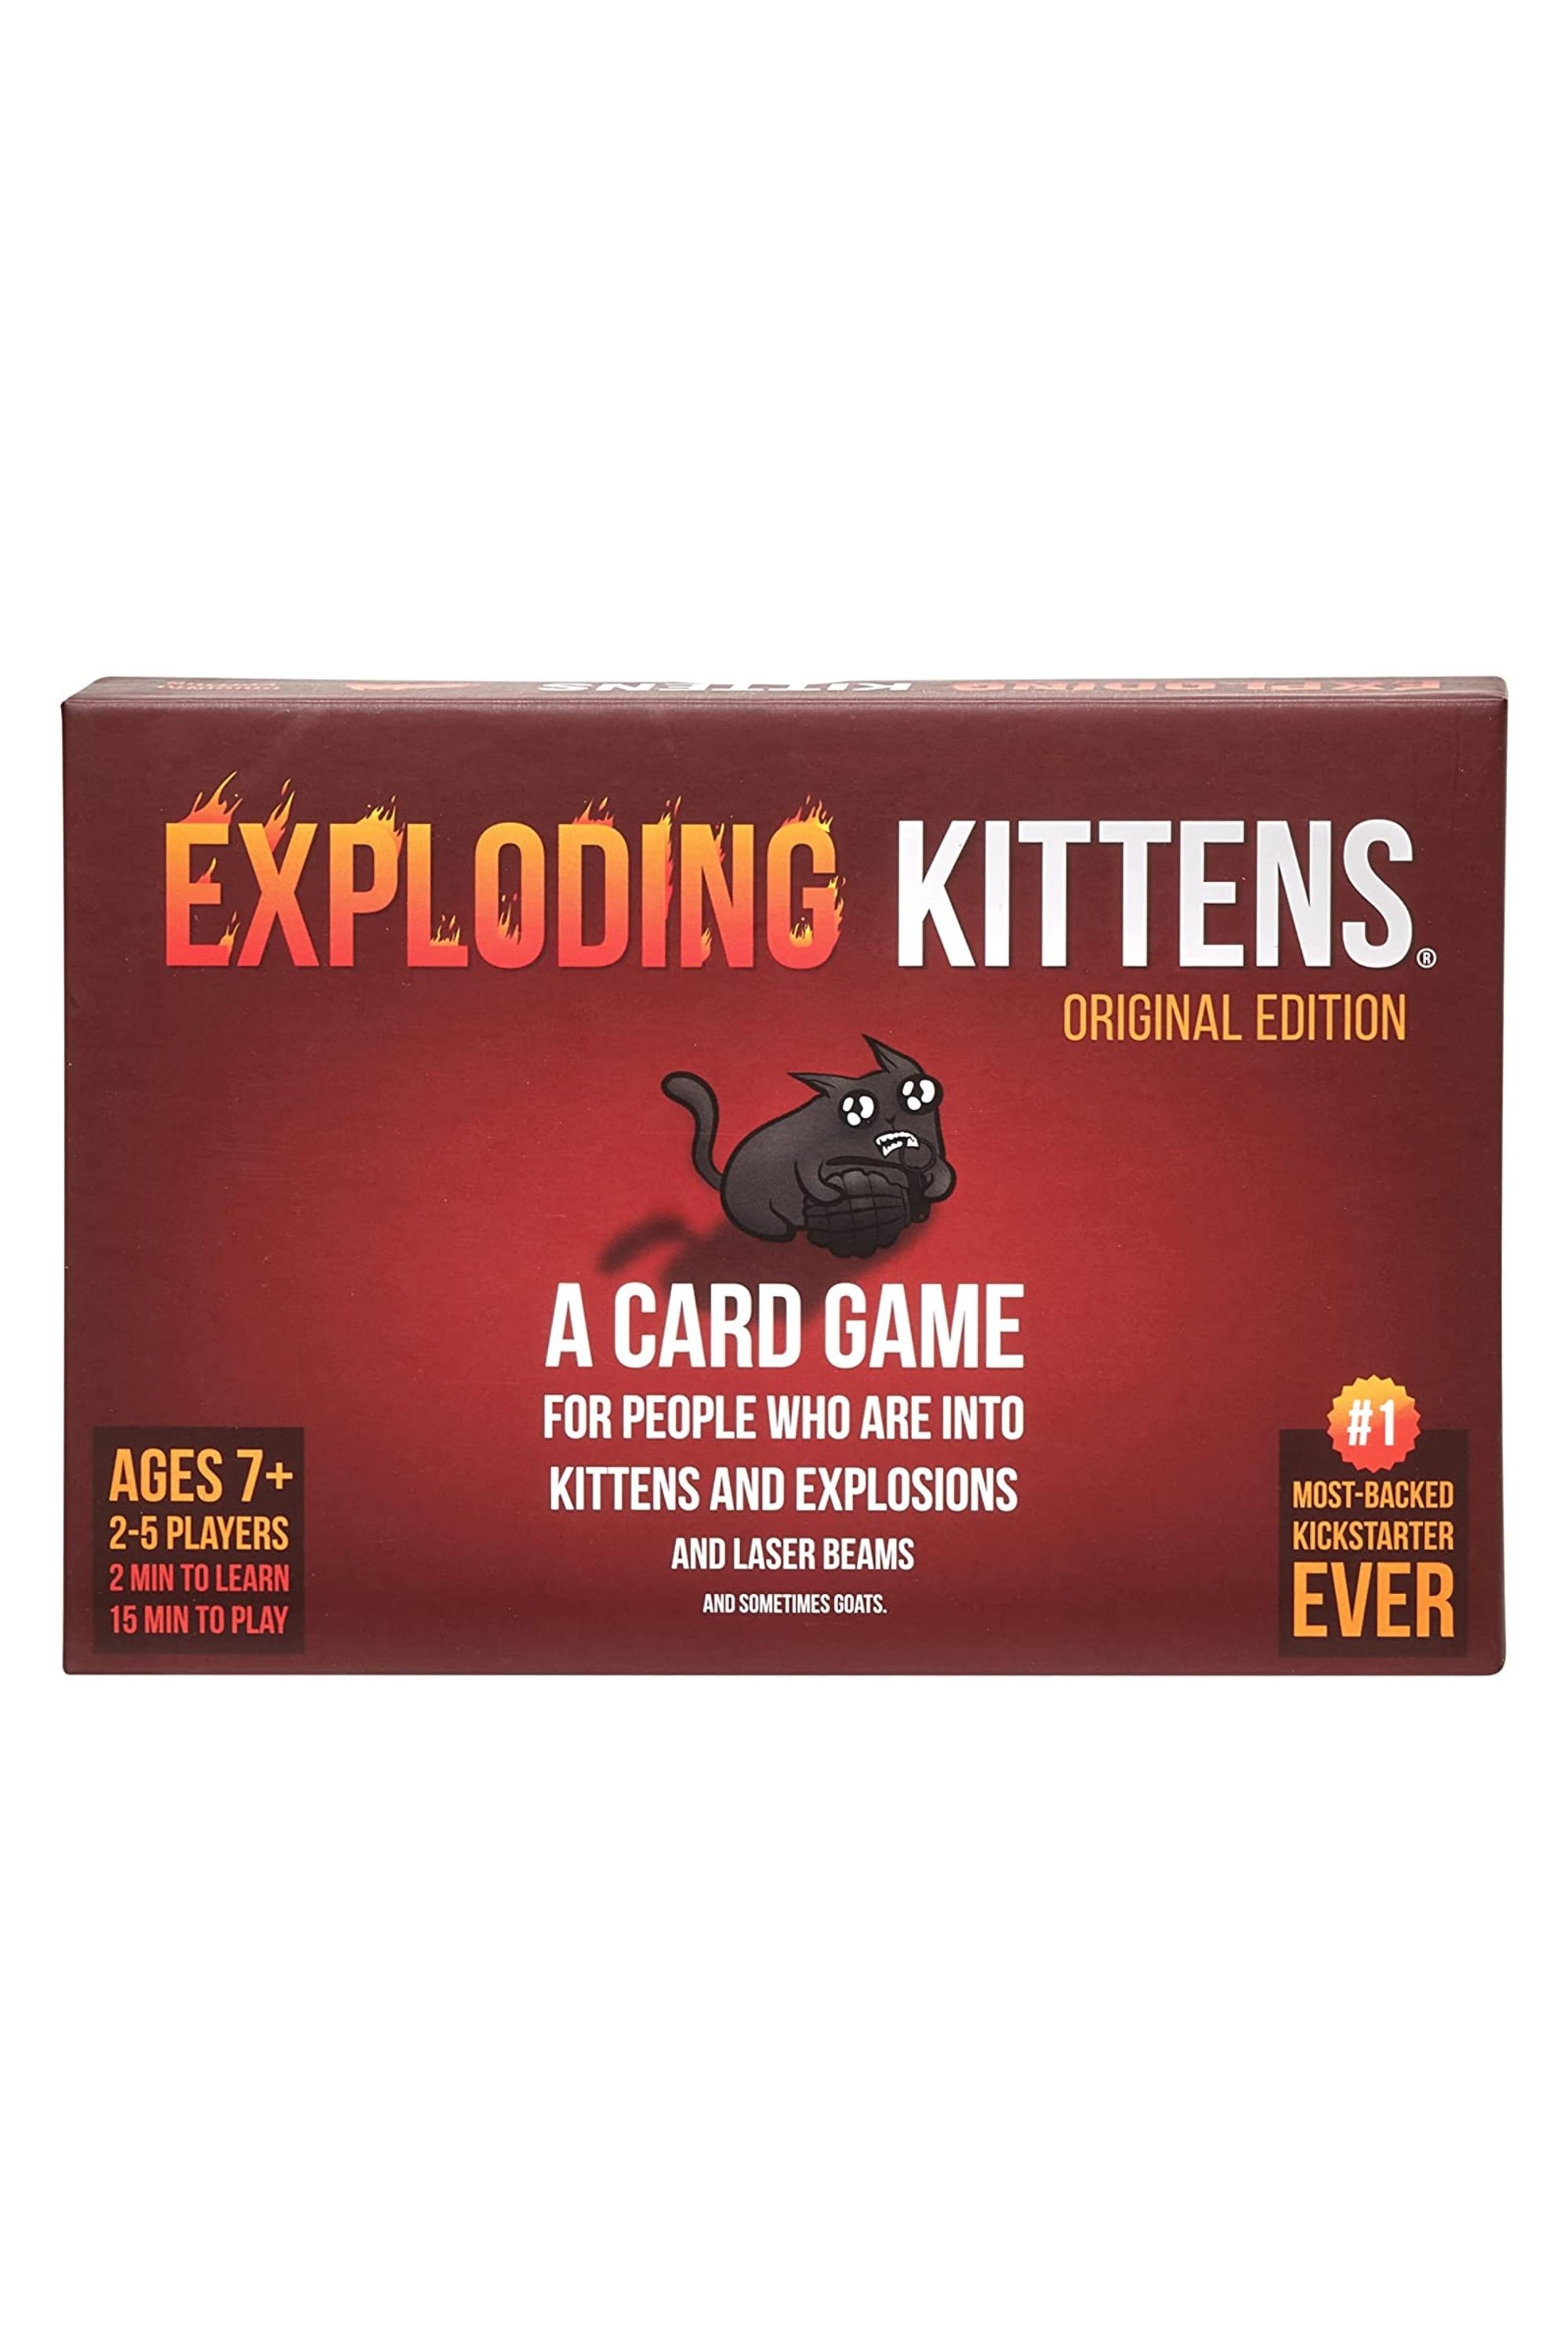 Exploding Kittens Card Game Box